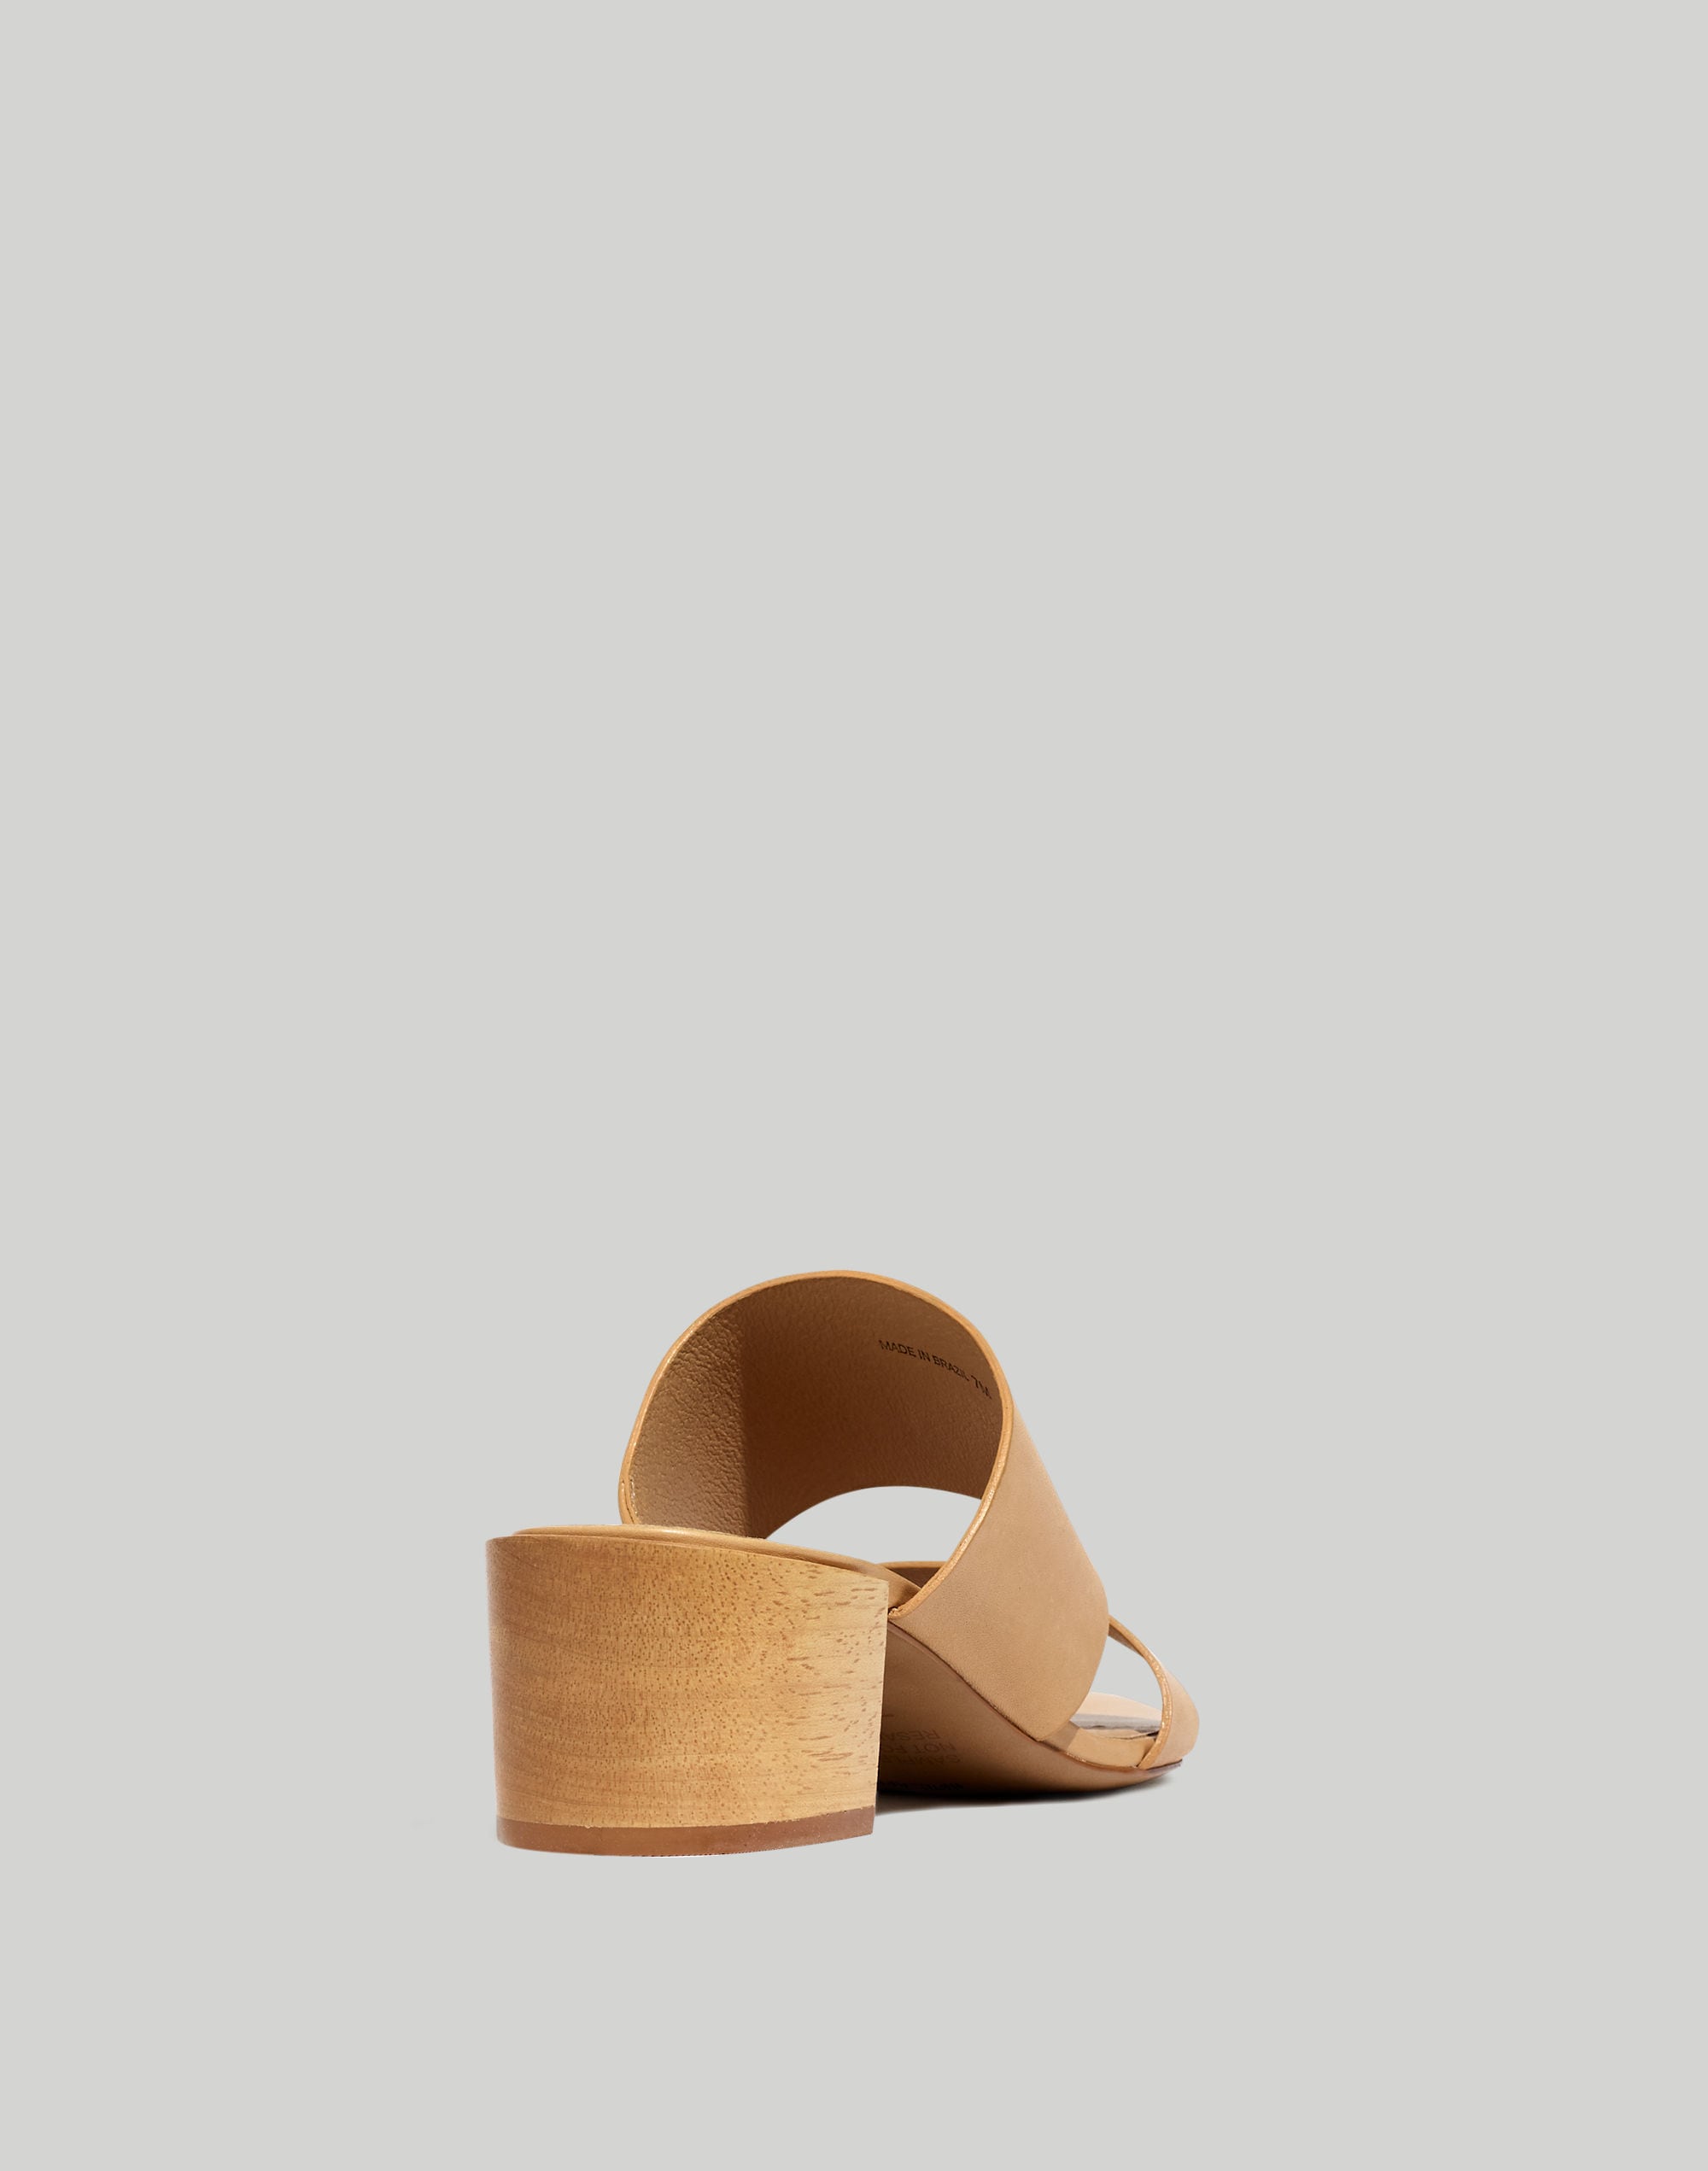 The Kiera Mule Sandal